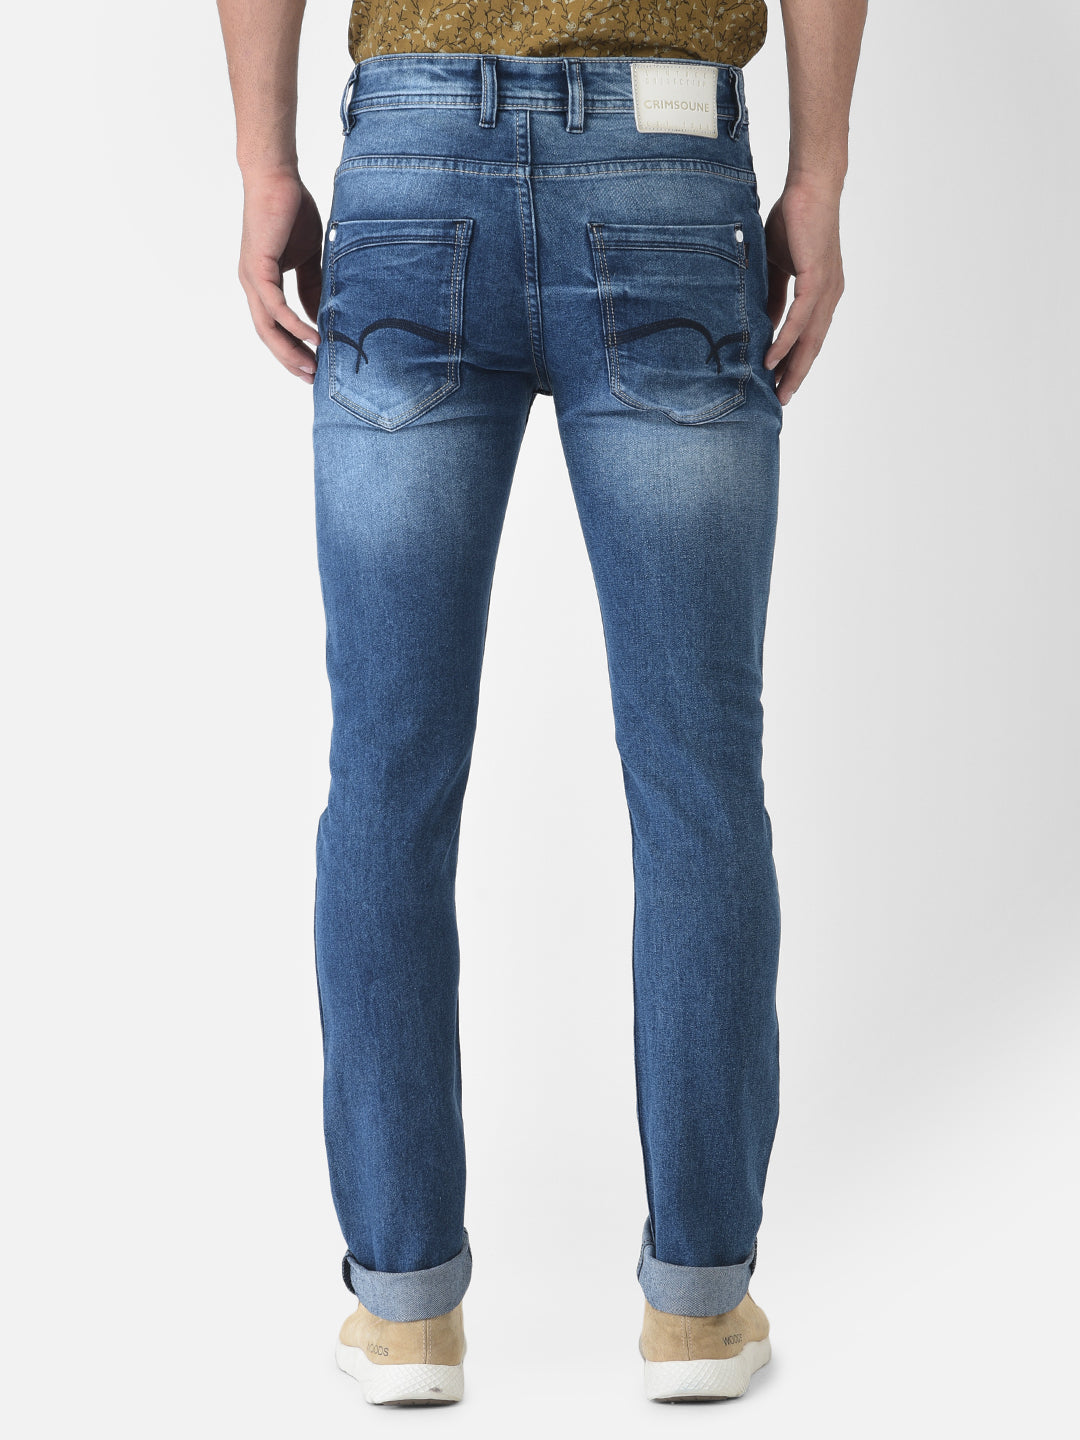 Lightly Faded Blue Jeans - Men Jeans